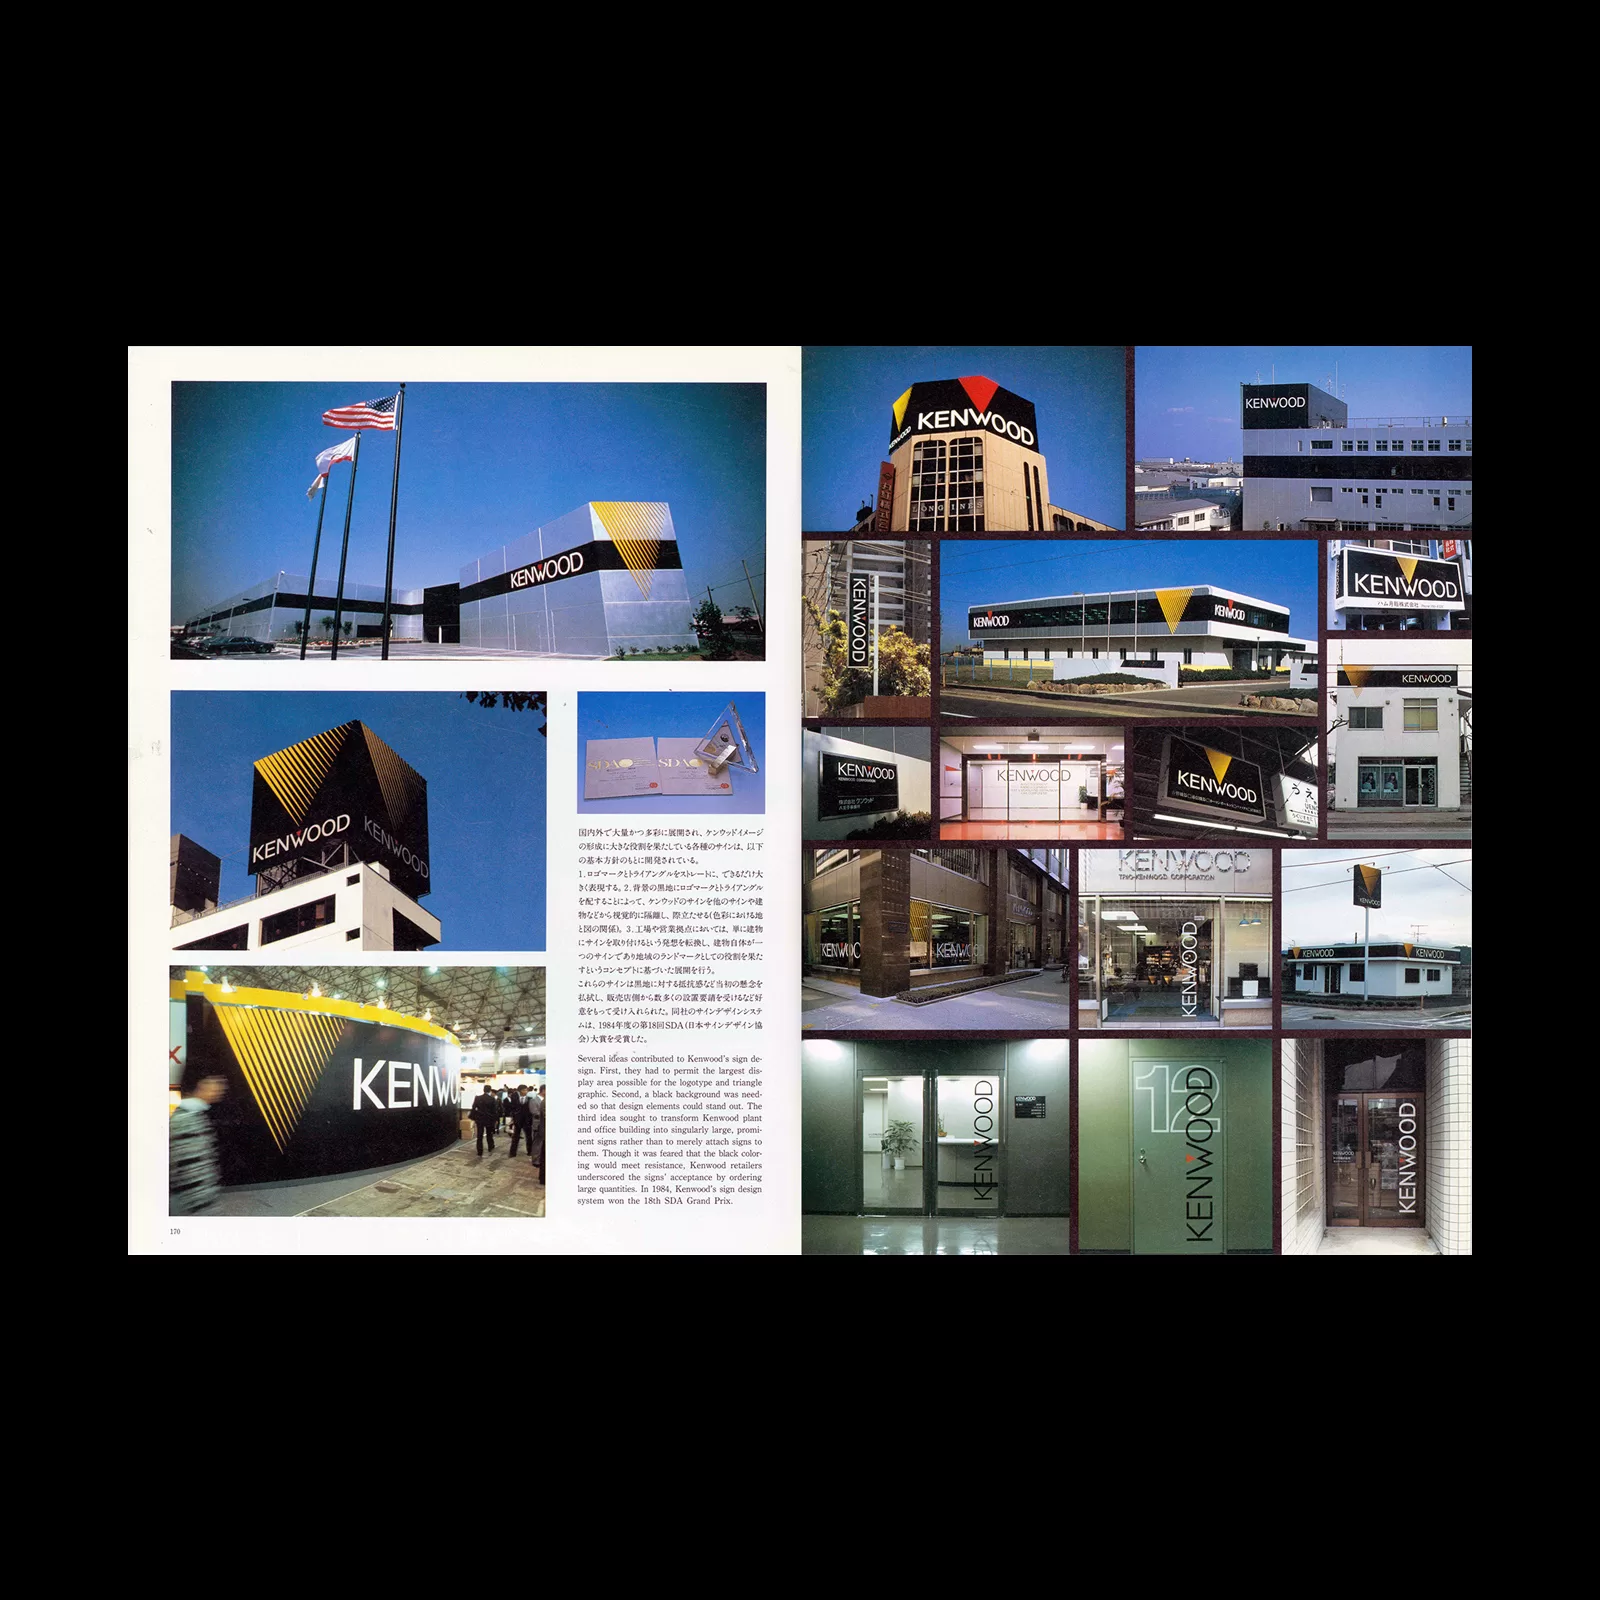 Kenwood - PAOS Design, [The World of Corporate Beauty], CI Design, (23 Book Set), 1989